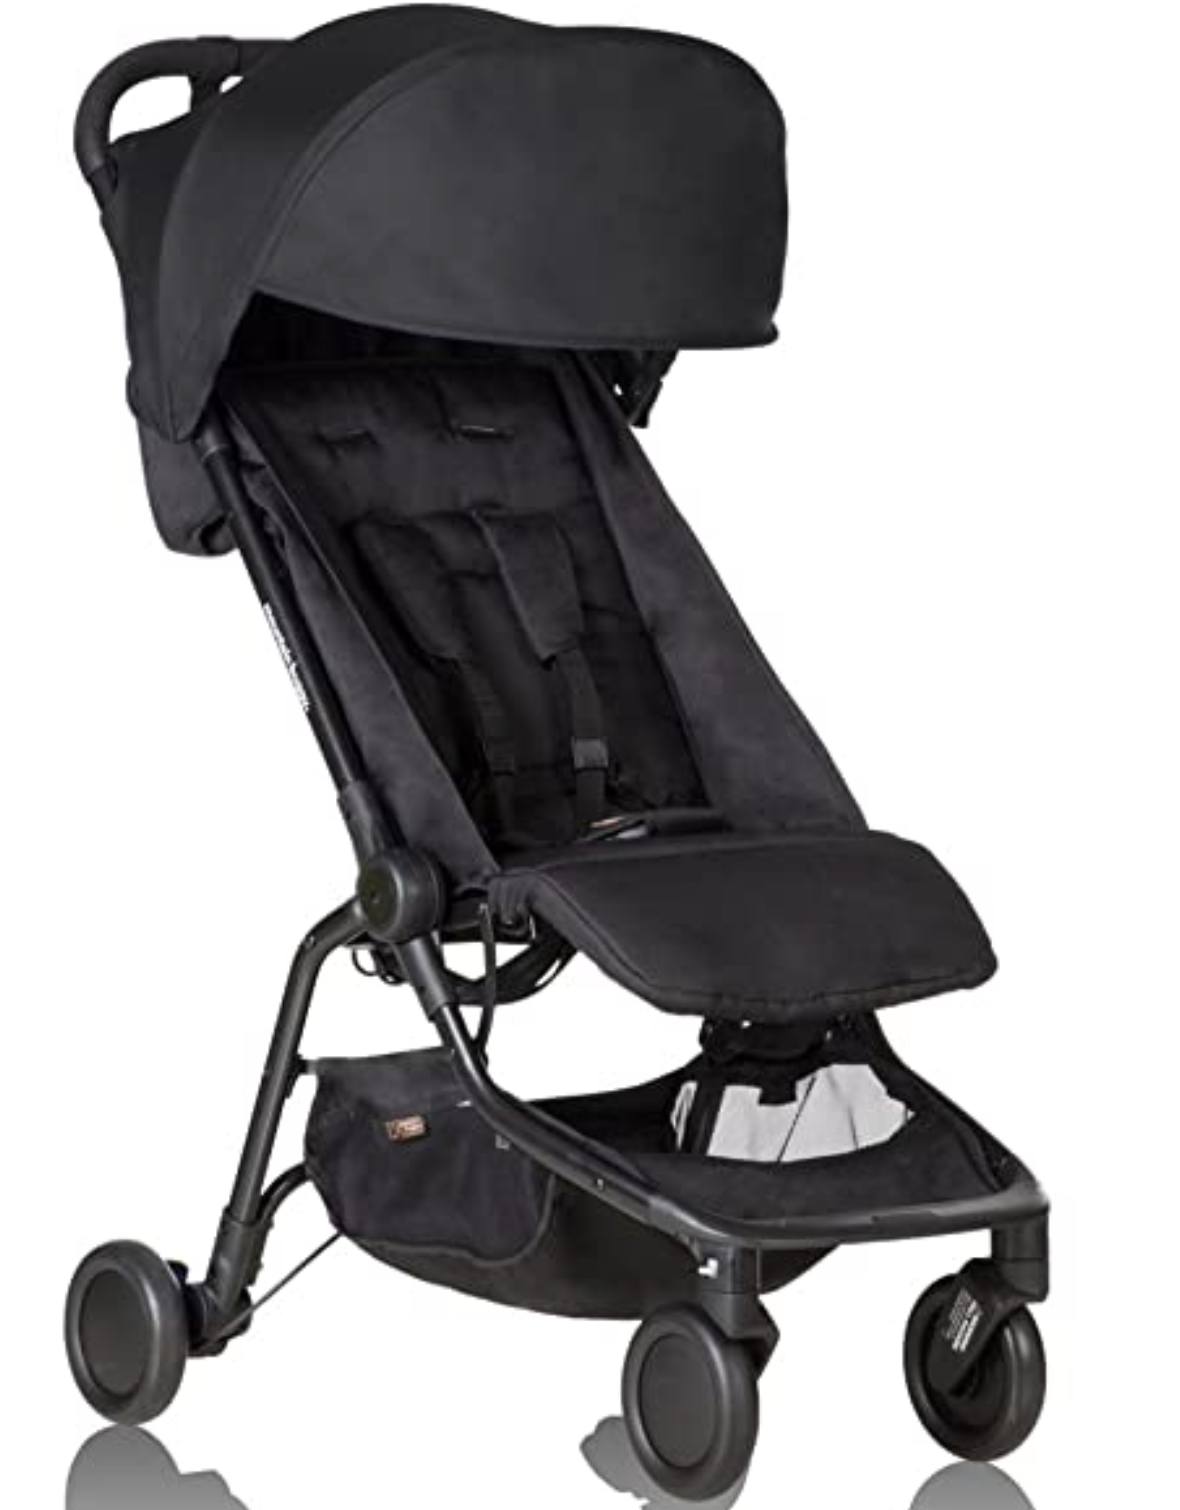 Black buggy nano stroller